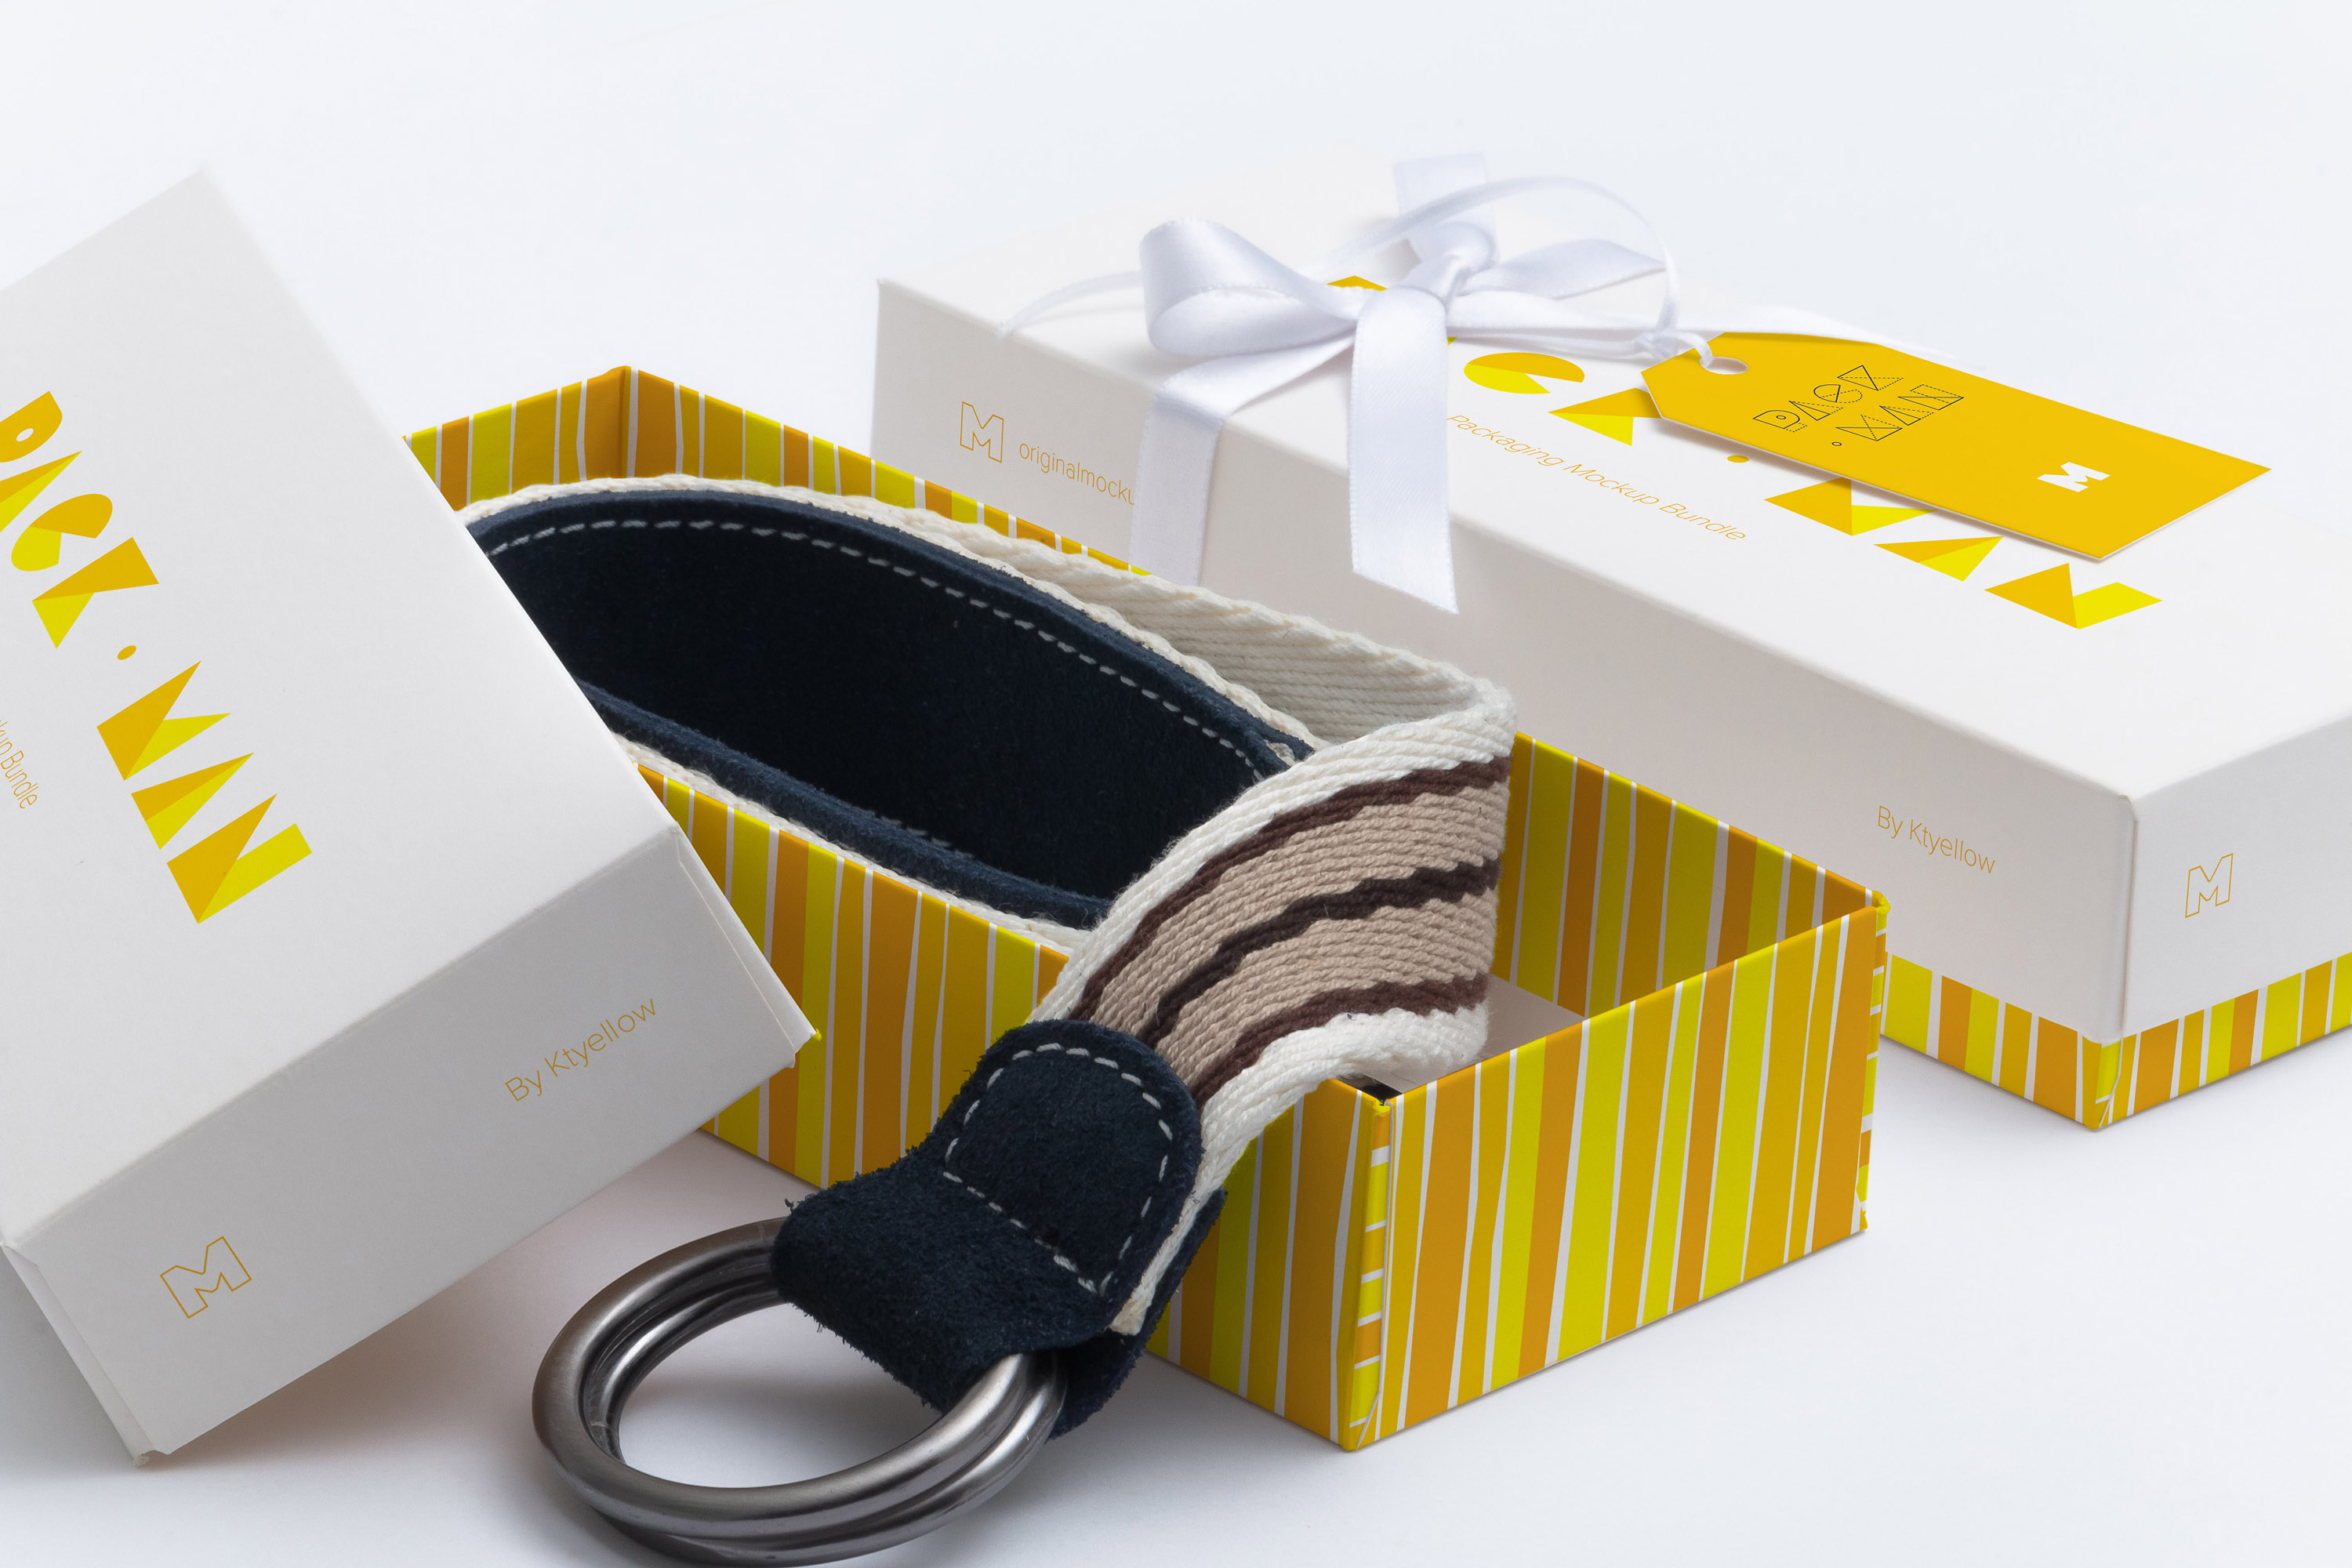 矩形精品礼品盒外观设计效果图样机02 Rectangular Gift Box Mockup 02插图